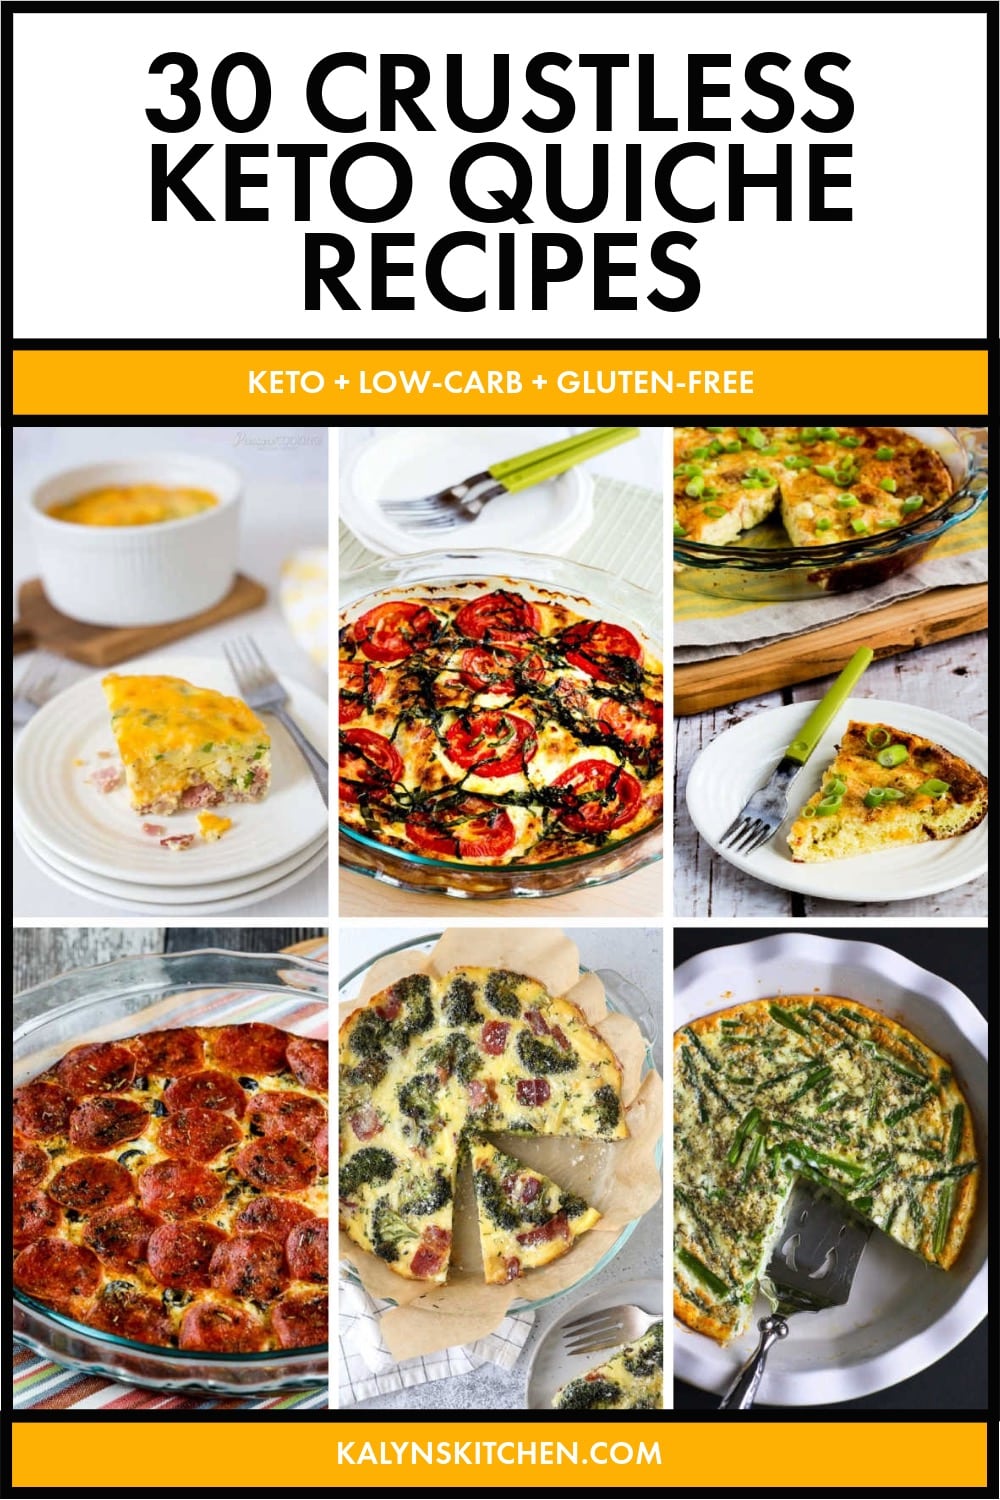 Pinterest image of 30 Crustless Keto Quiche Recipes